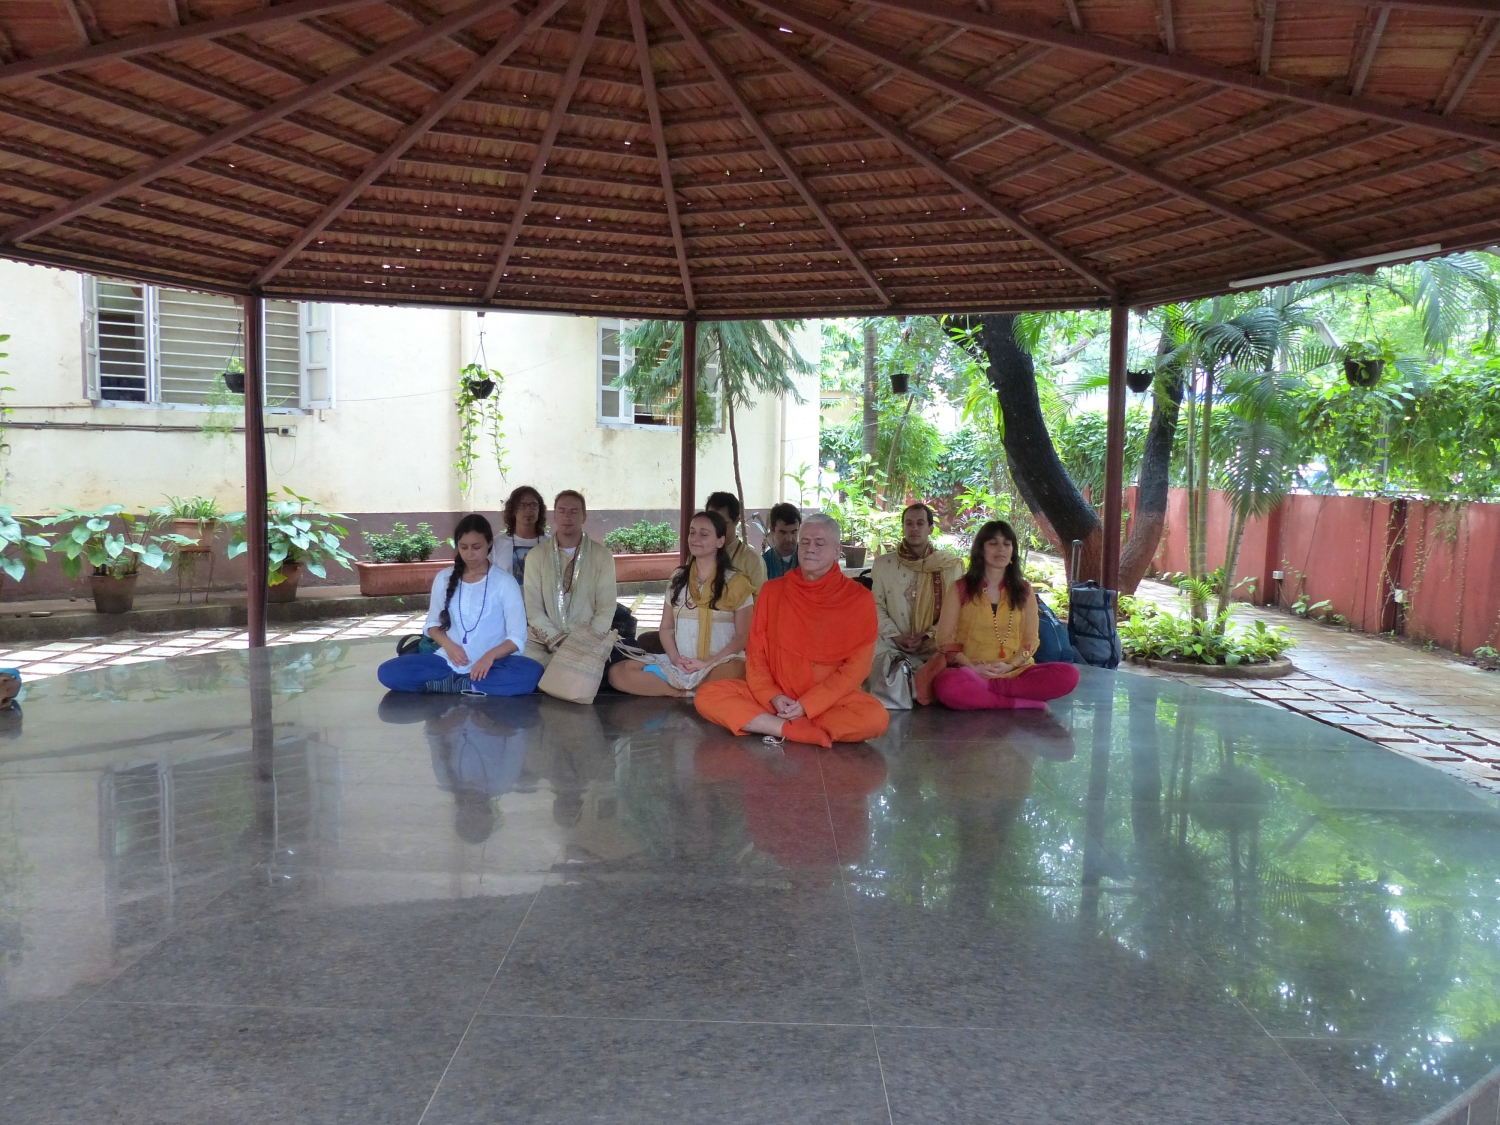 Encuentro de H.H. Jagat Guru Amrta Sūryānanda Mahā Rāja con Smt. Hansaji Jayadeva Yogendra - The Yoga Institute of Santa Cruz, Mumbai, India - 2014, julio